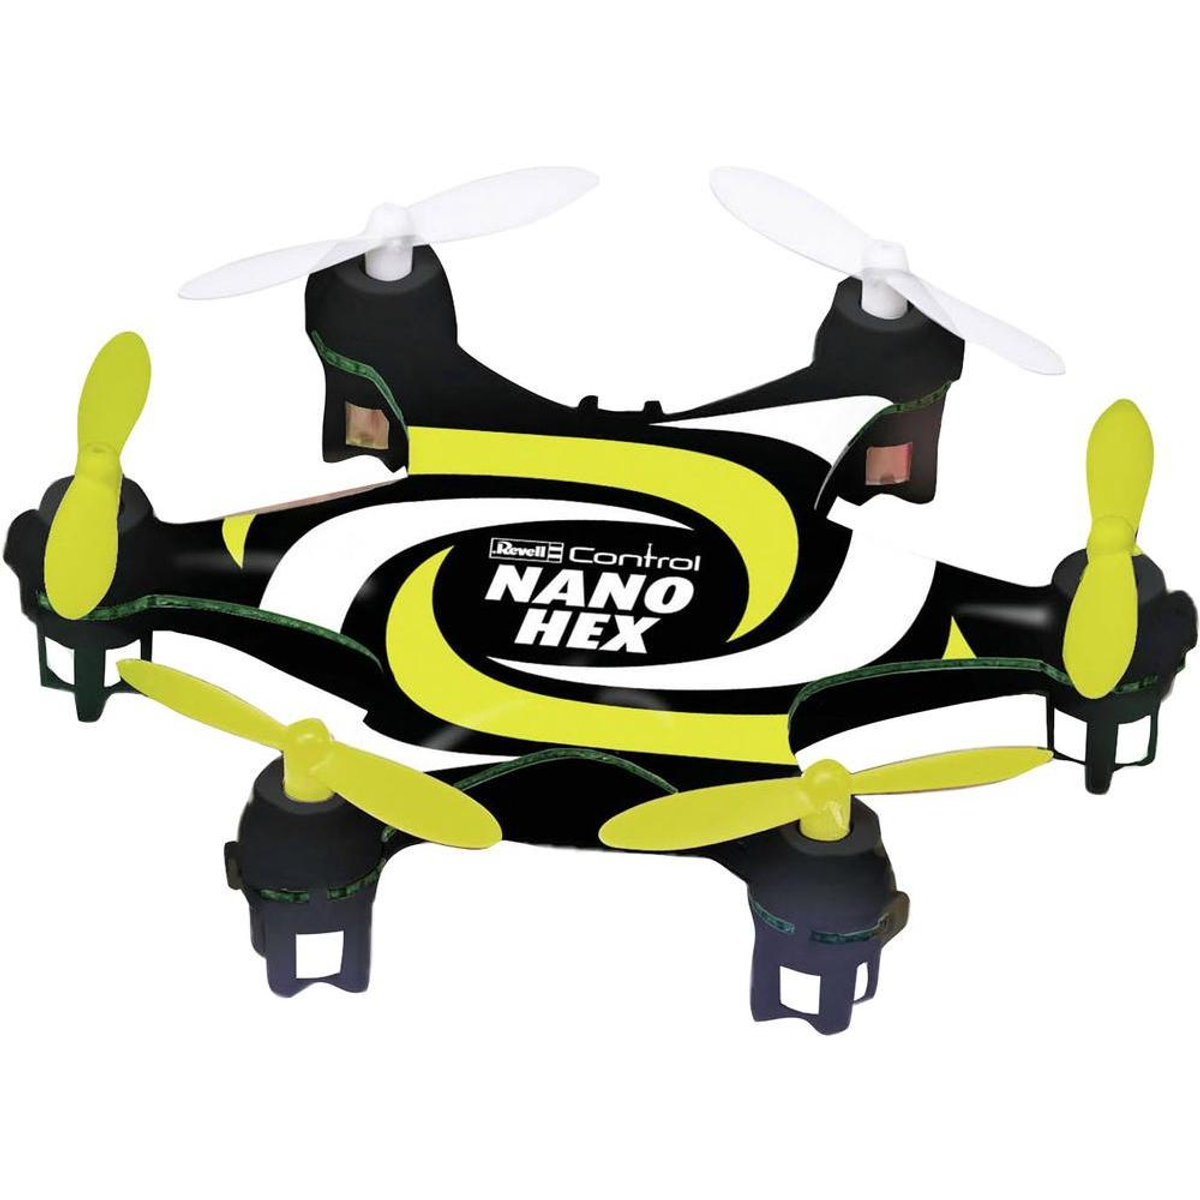 Revell Nano Hex Quadrocopter